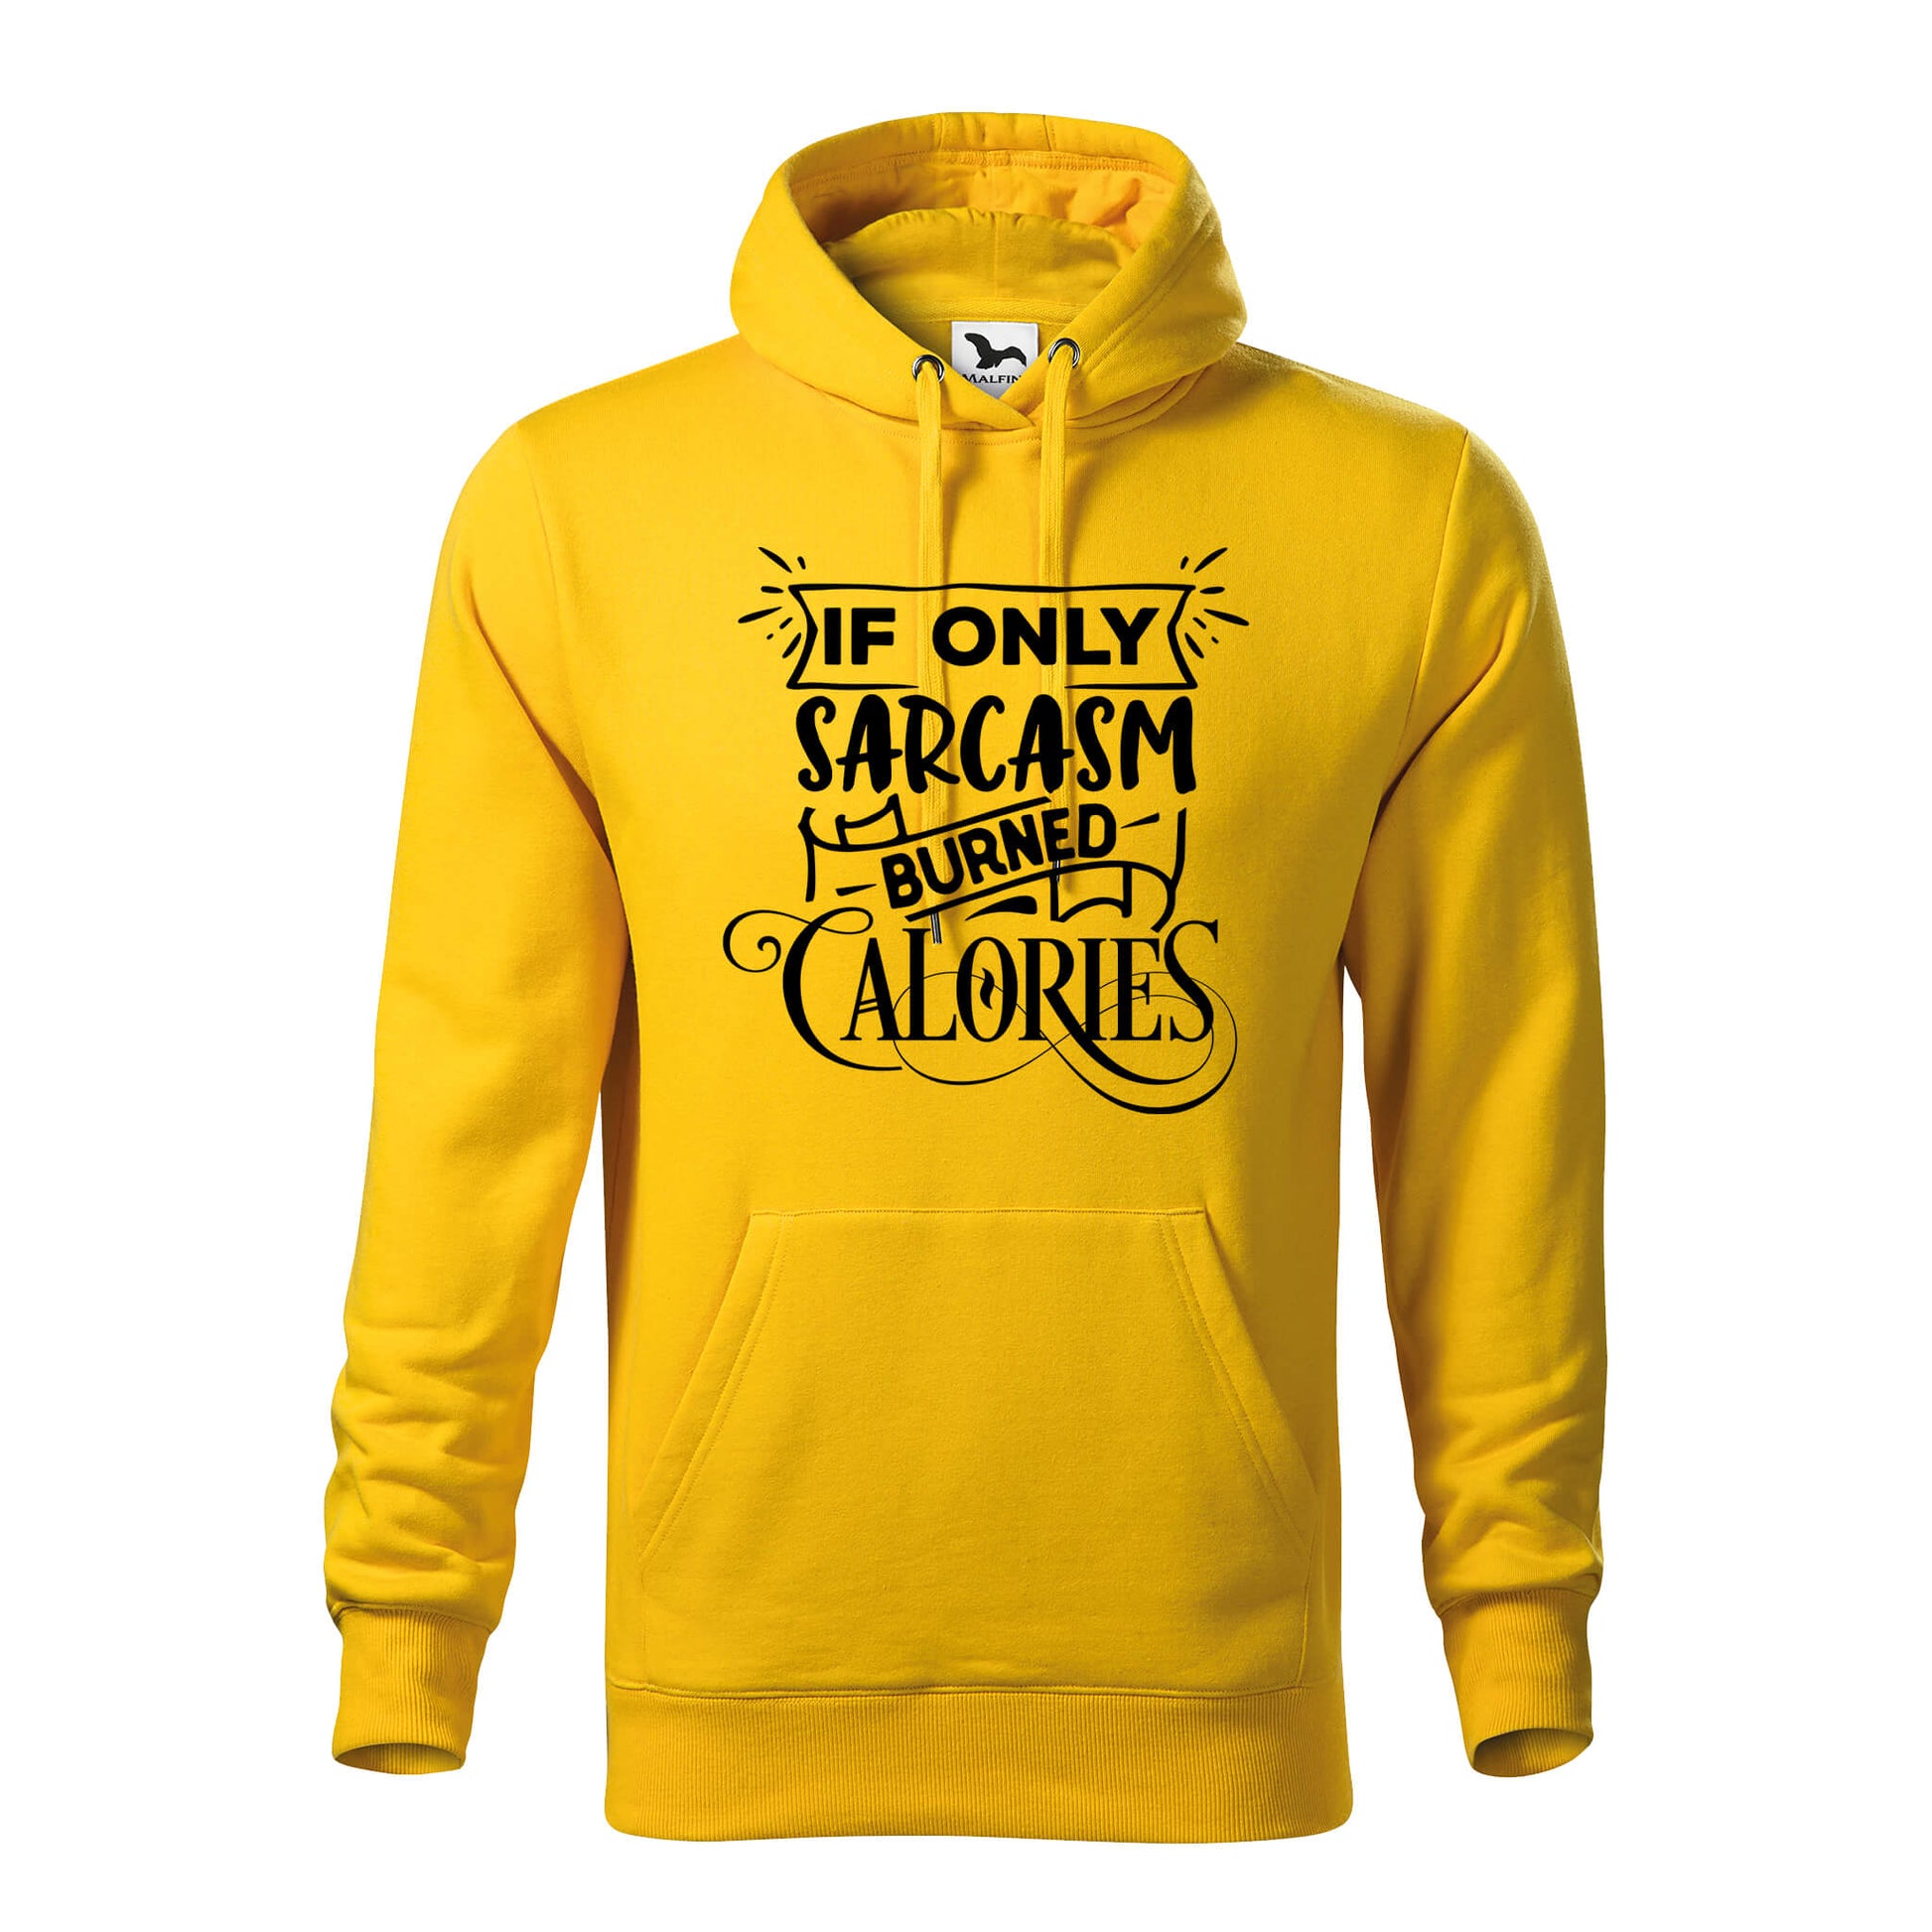 Sarcasm calories hoodie - rvdesignprint